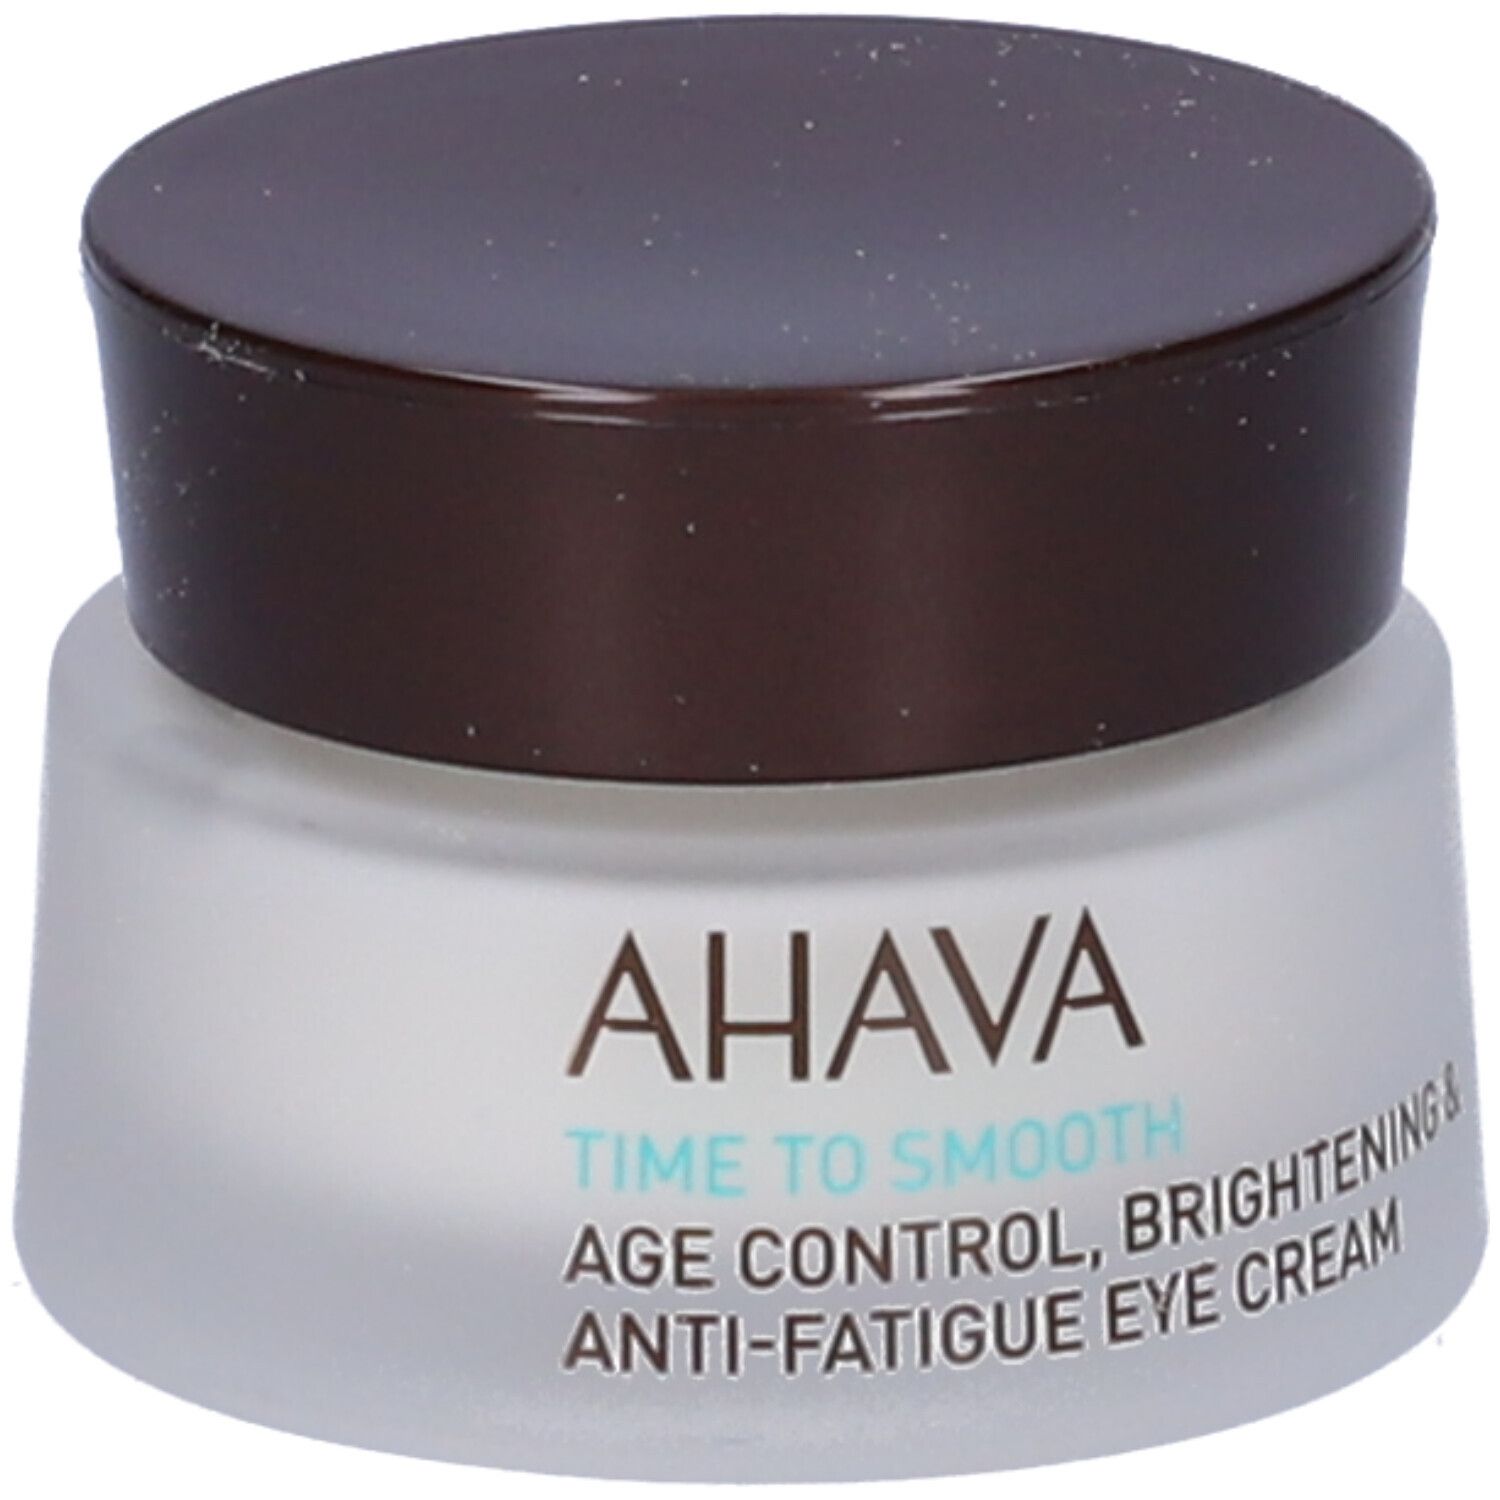 AHAVA Age Control Brightening and Anti-Fatigue Eye Cream